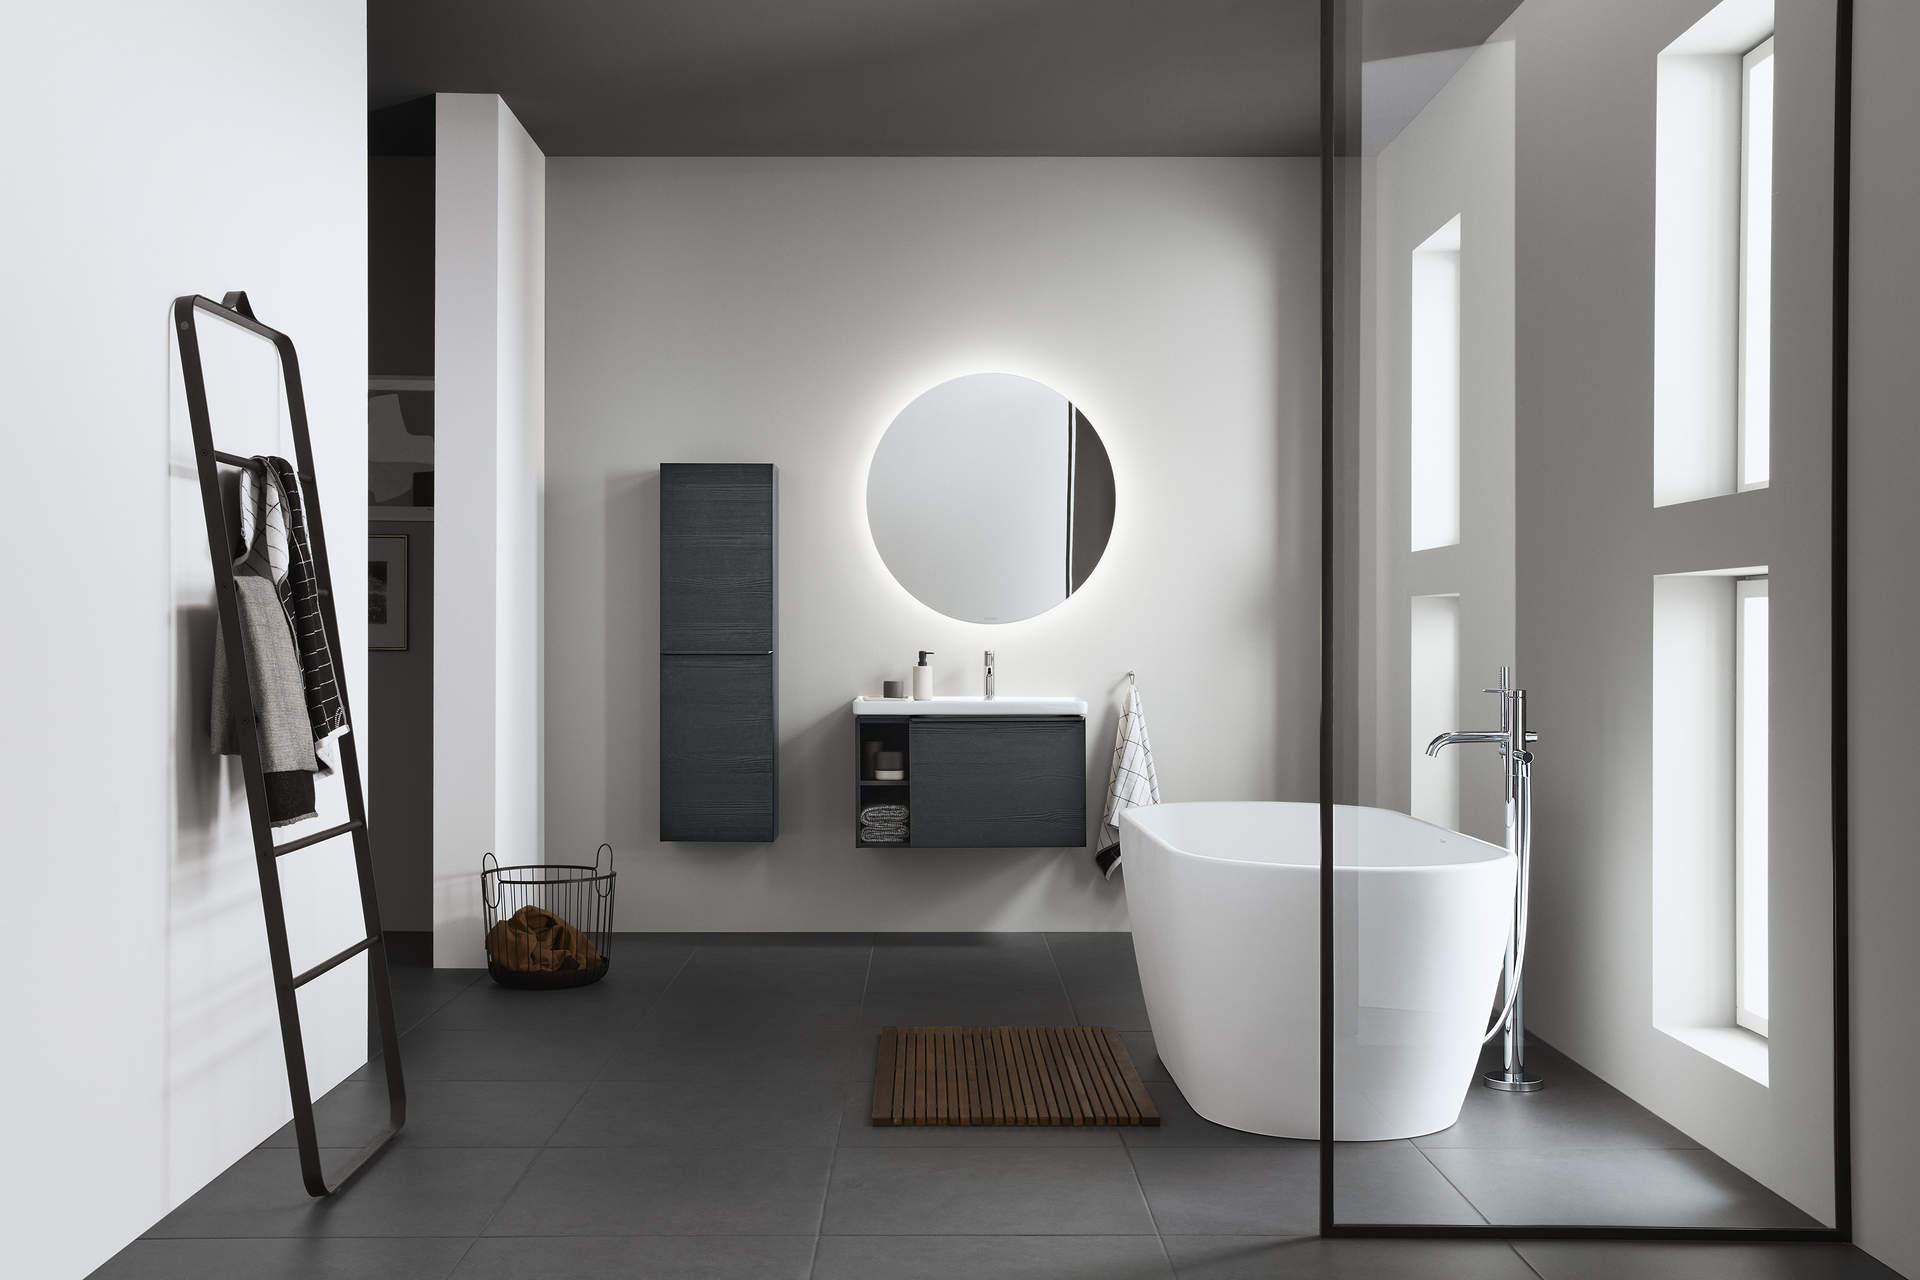 Furniture washbasin asymmetric, 237080